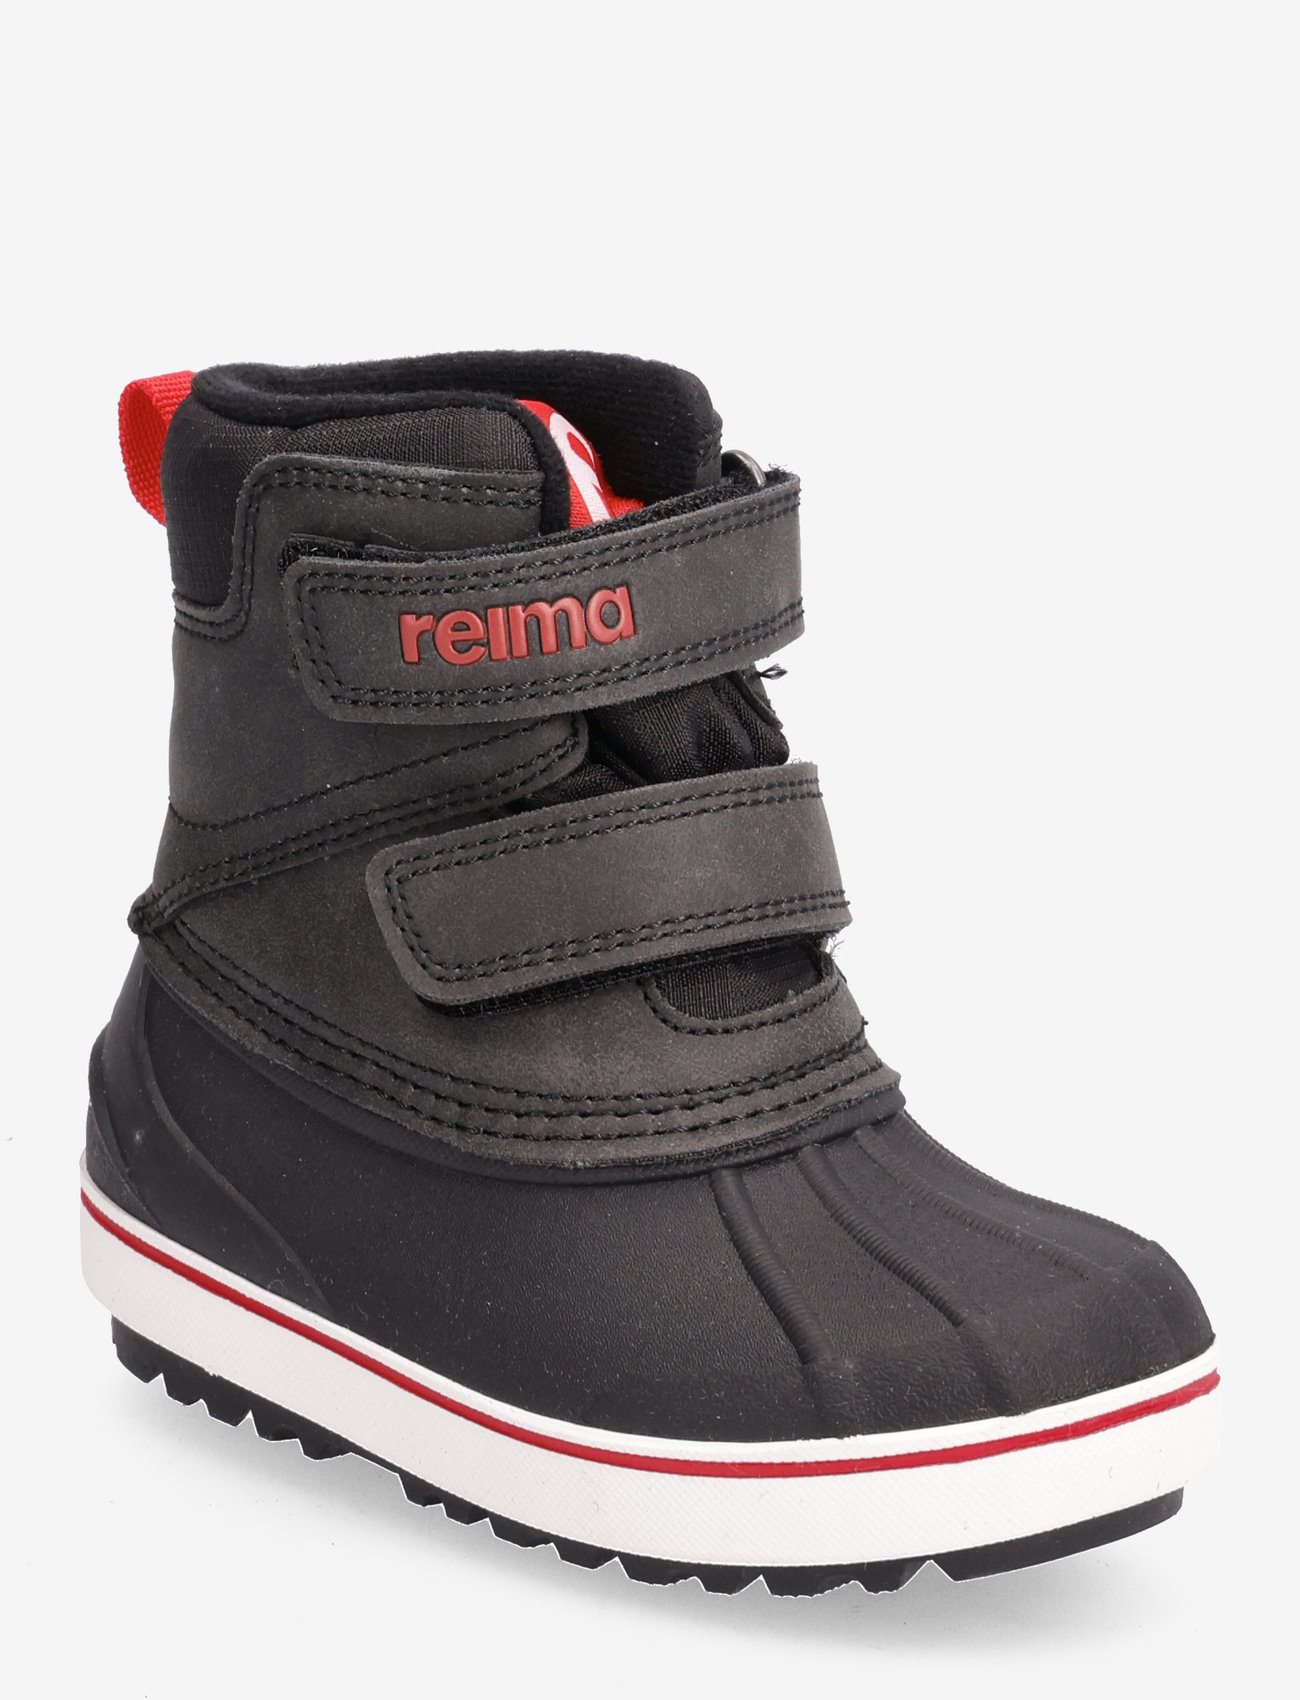 Reima - Winter boots, Coconi - chaussures - black - 0